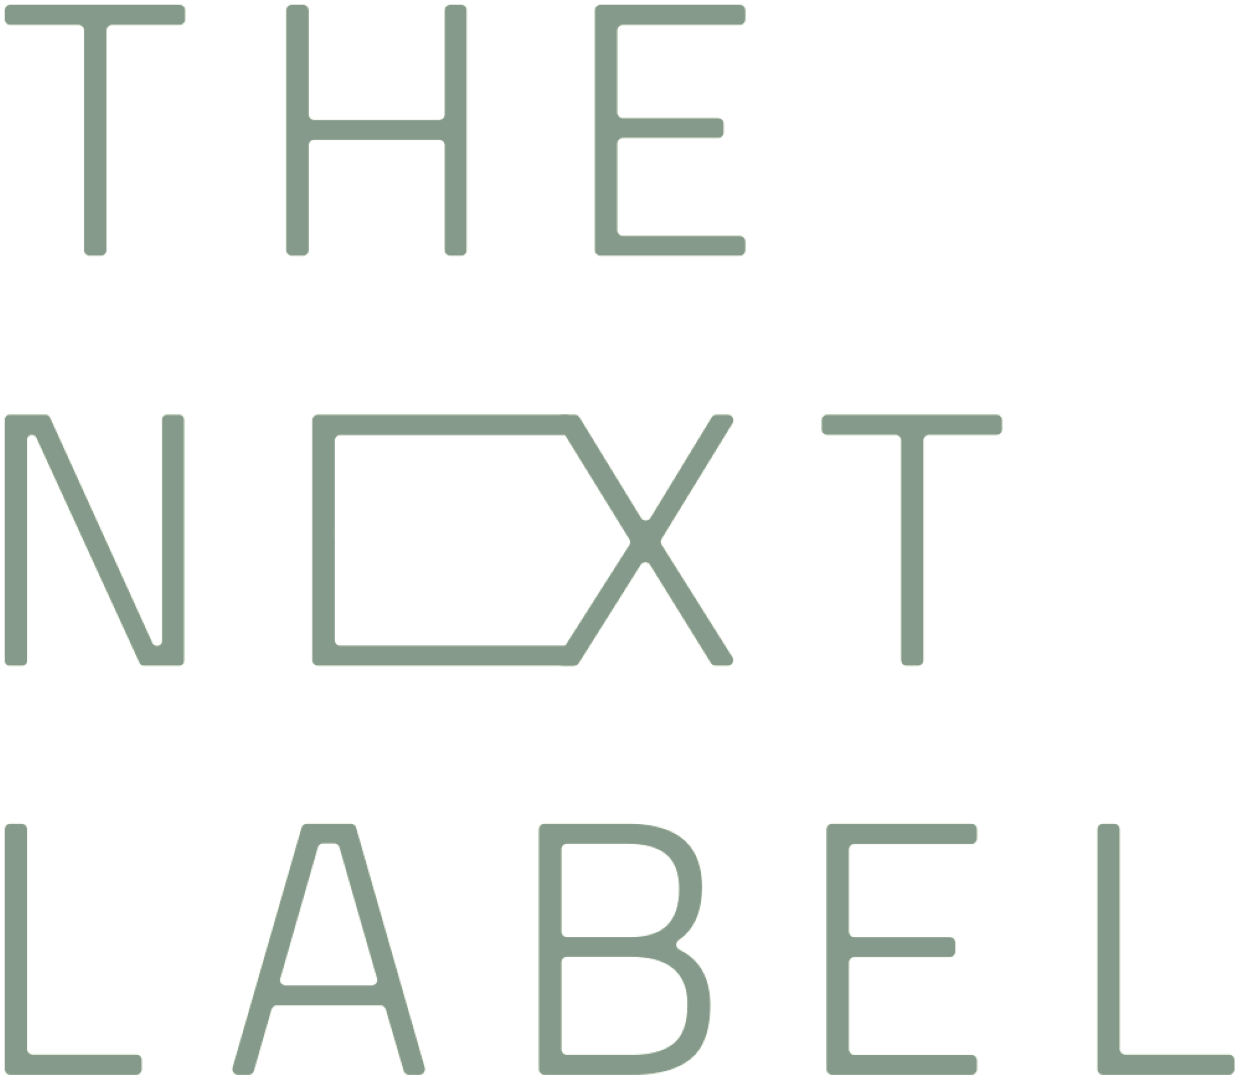 The next label